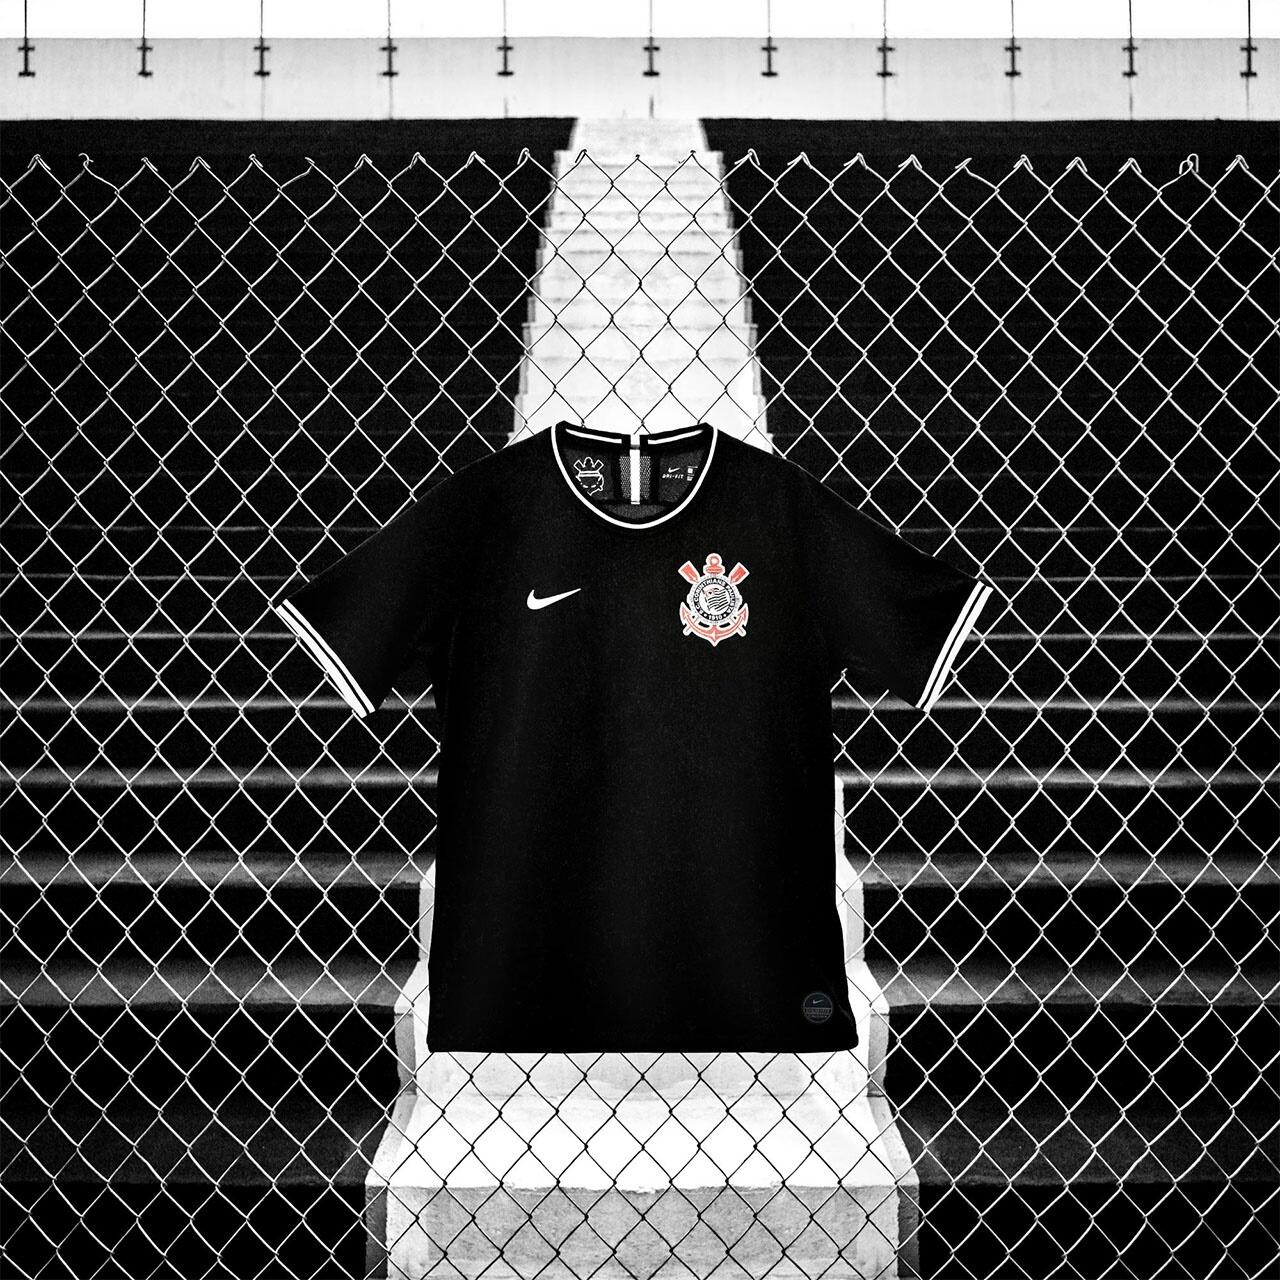 Segunda Camisa do Corinthians